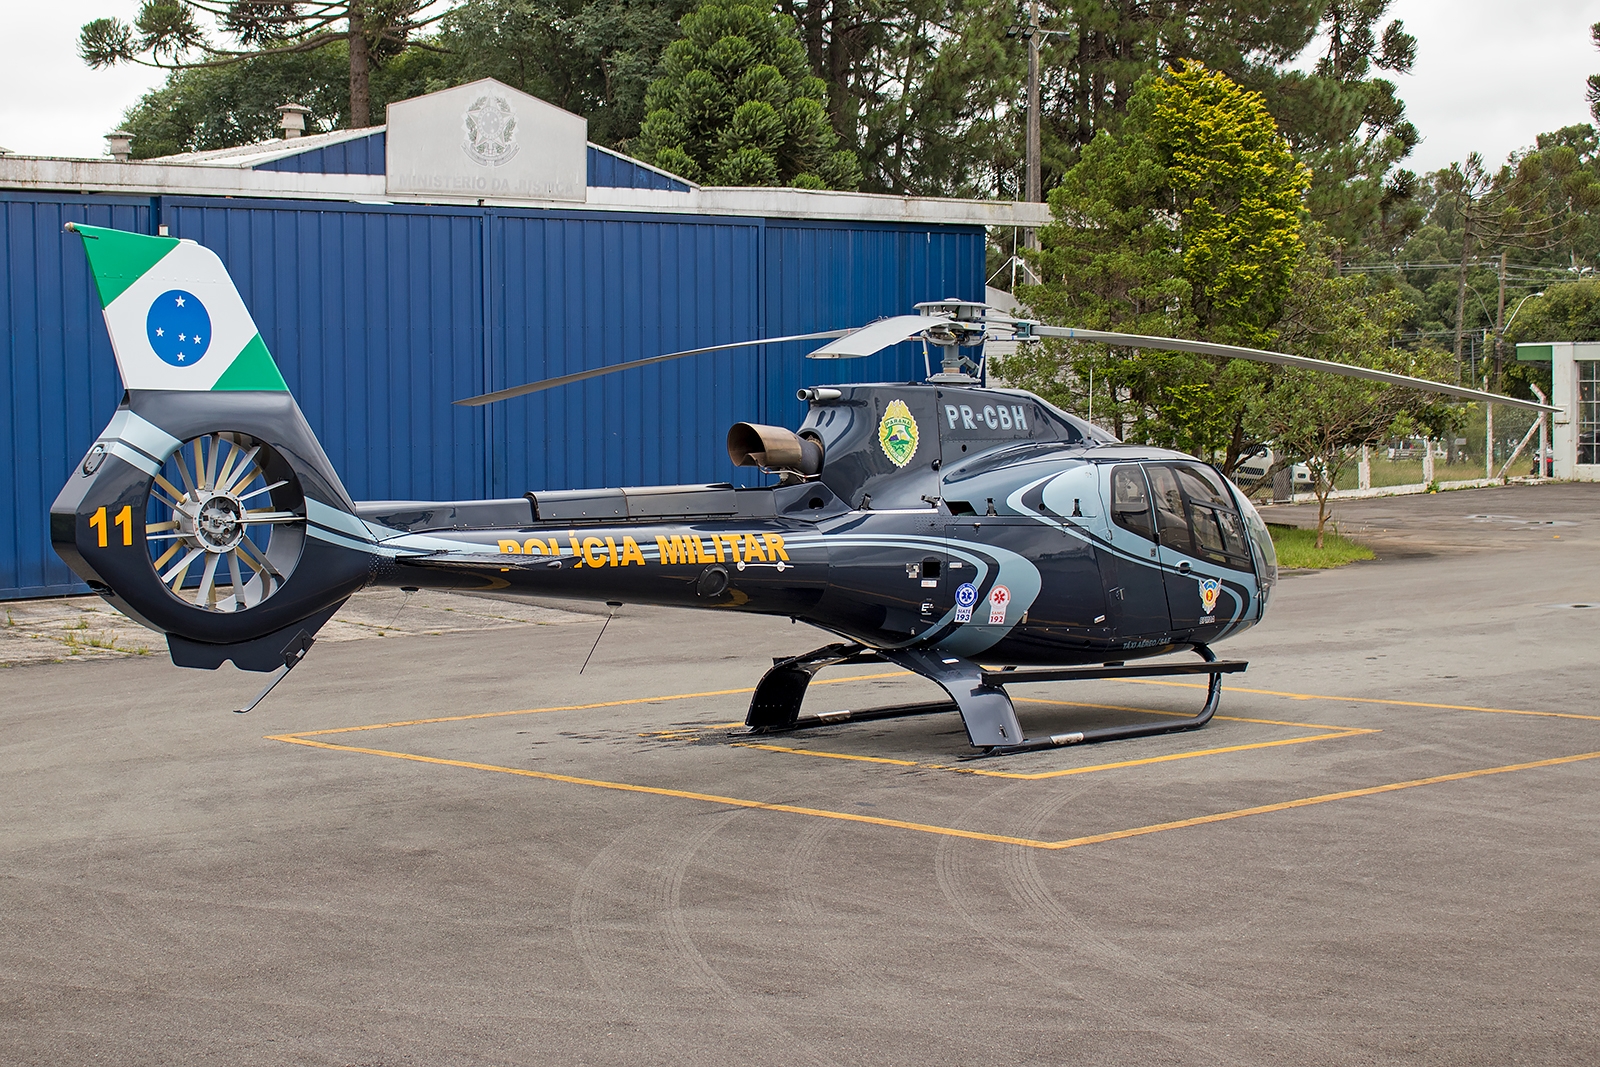 PR-CBH - Eurocopter EC 130B4